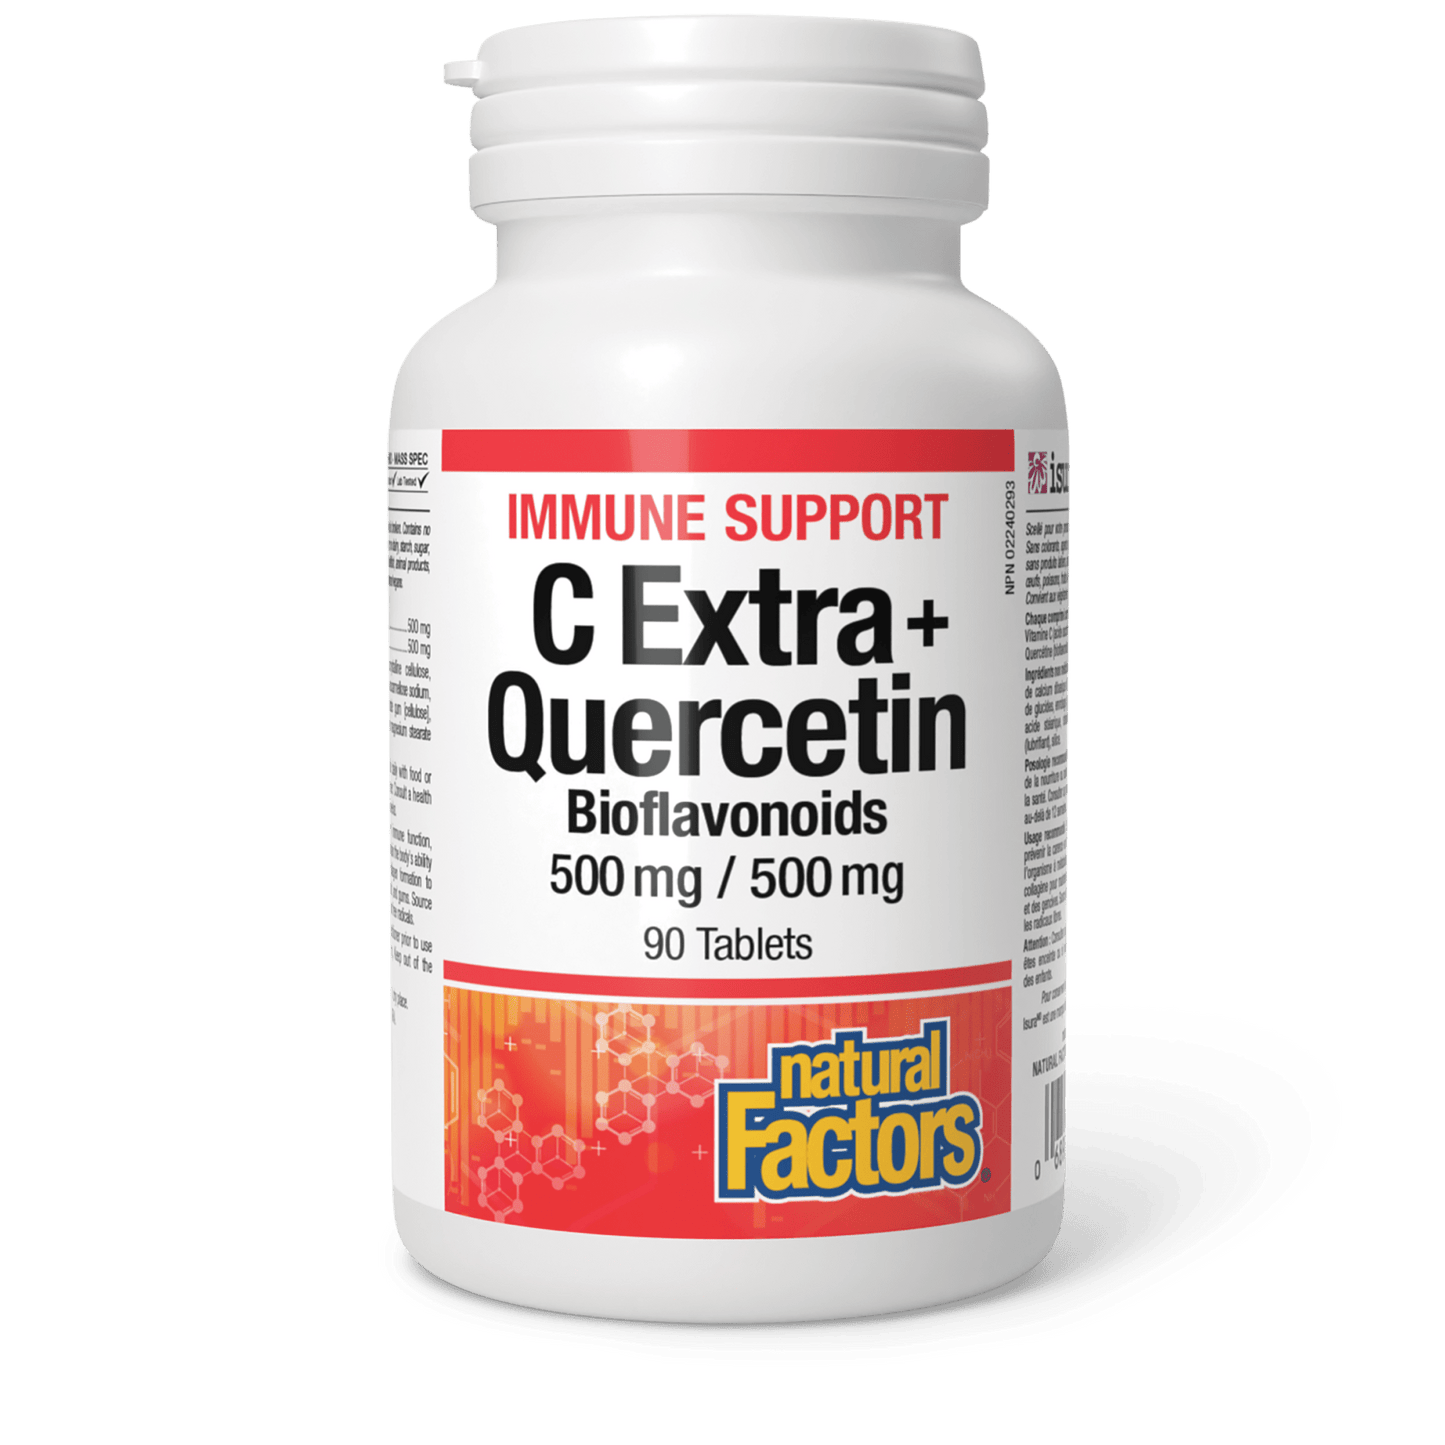 C Extra + Quercetin Bioflavonoids 500 mg/500 mg, Natural Factors|v|image|1334